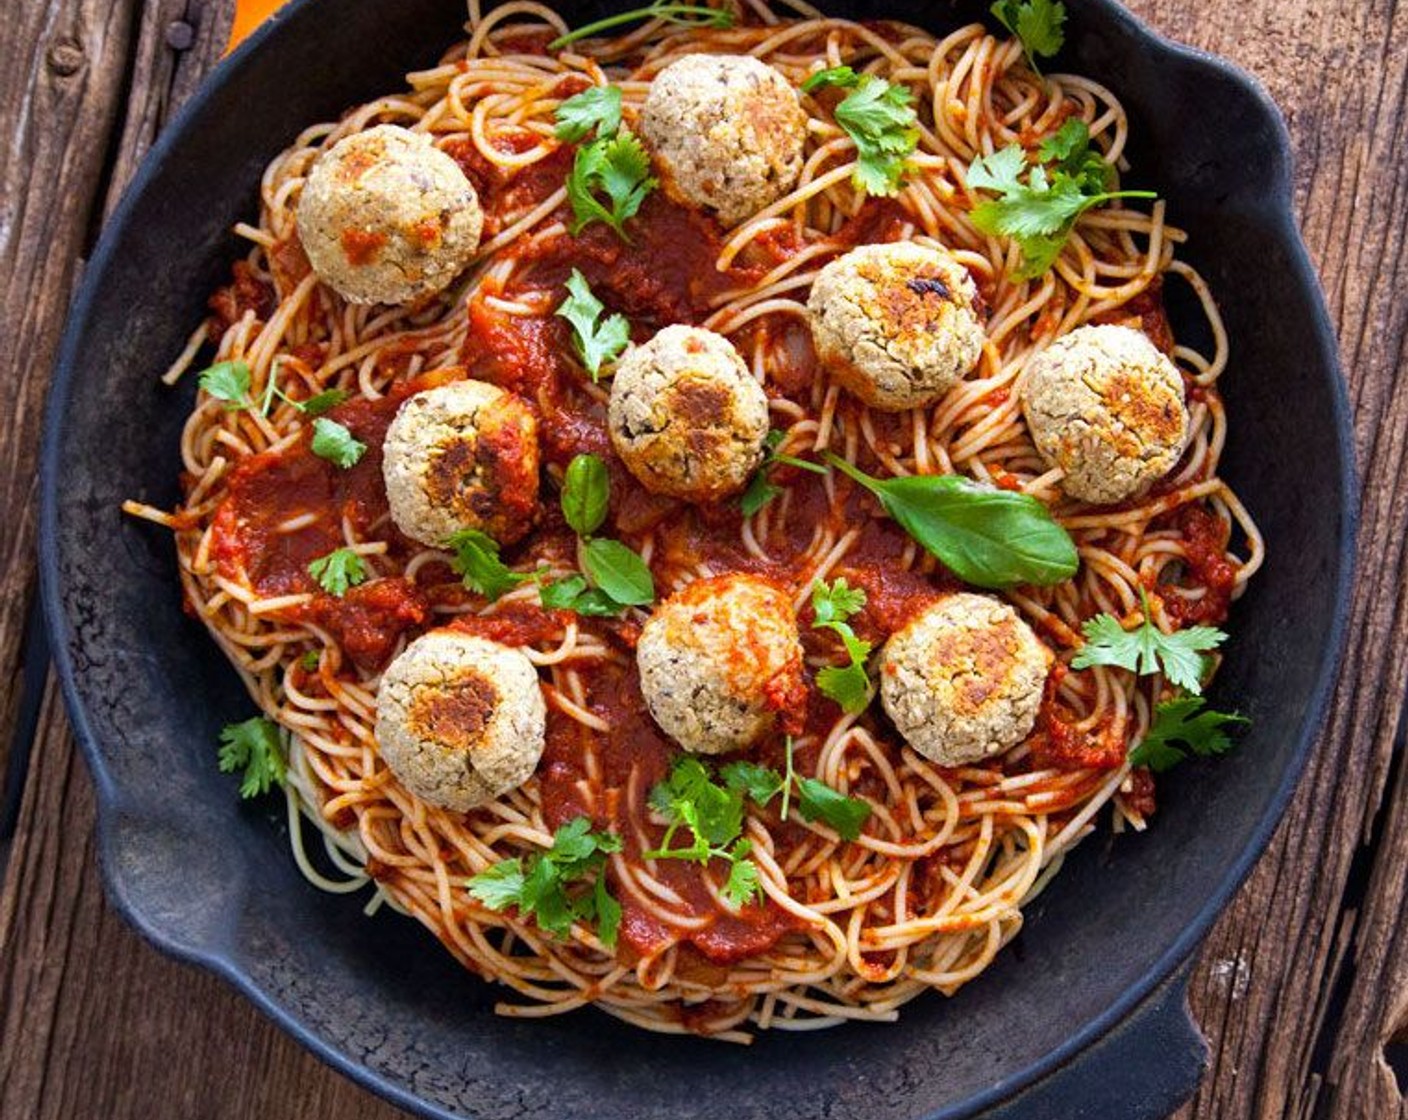 Vegan Spaghetti and Meatballs